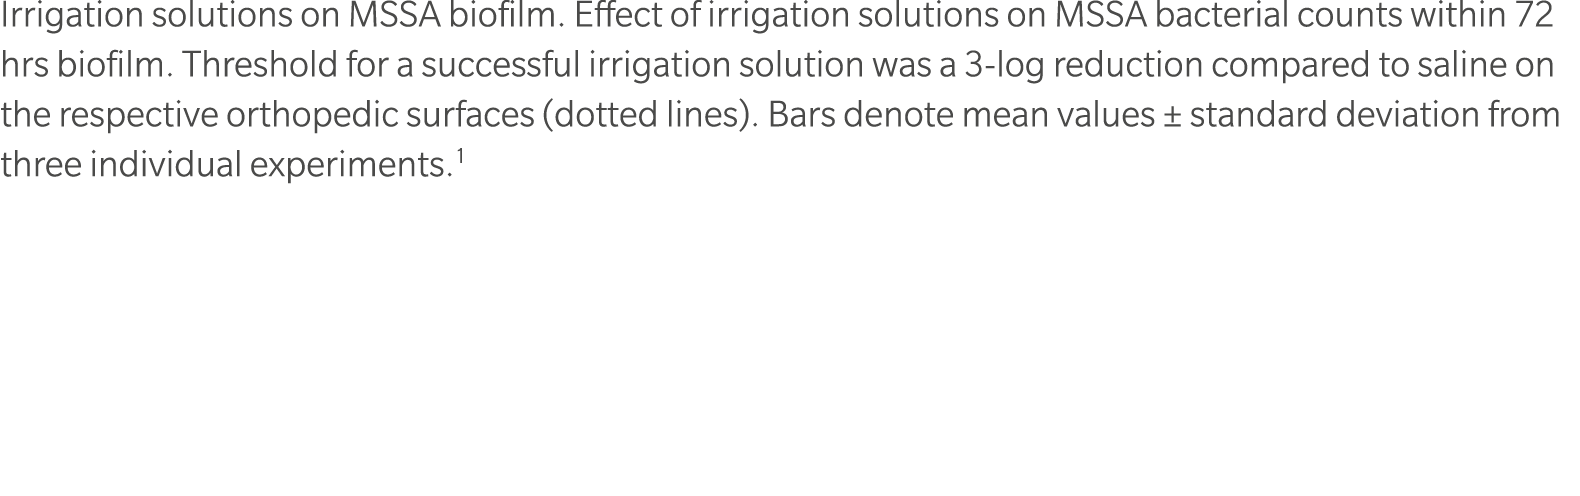 Irrigation solutions on MSSA biofilm. Effect of irrigation solutions on MSSA bacterial counts within 72 hrs biofilm. ...